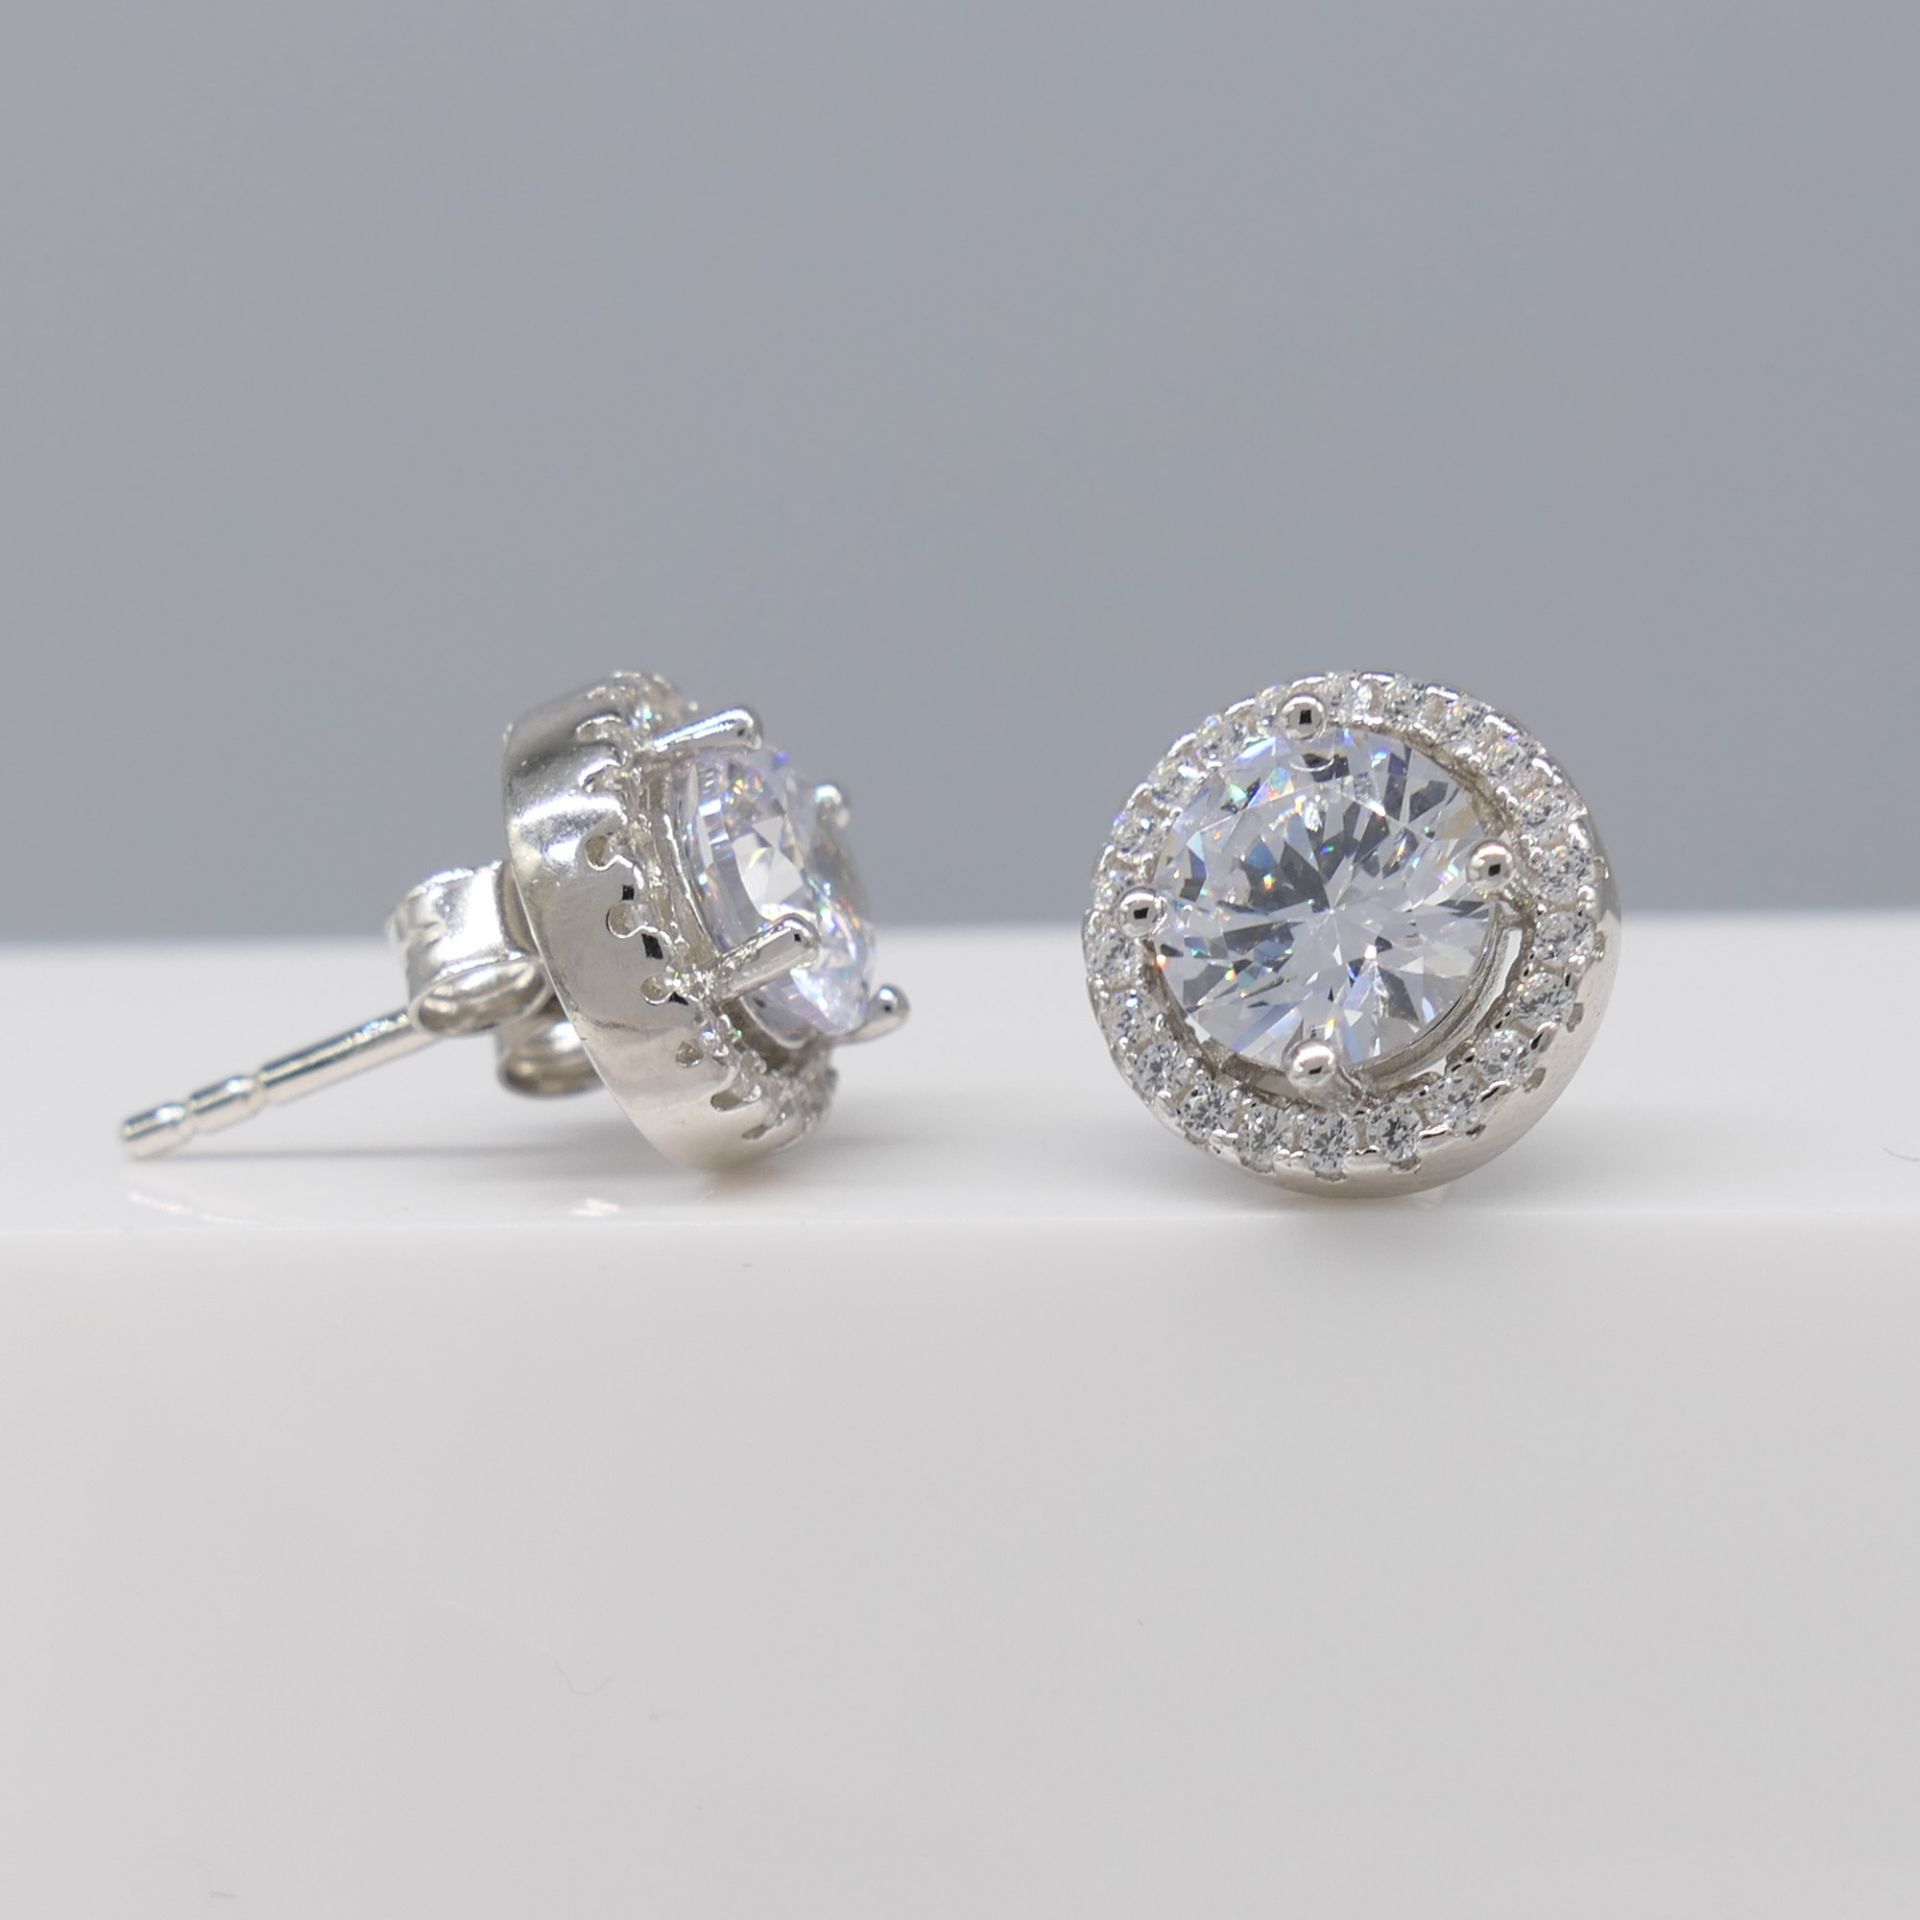 Pair of sterling silver halo stud earrings - Image 3 of 5